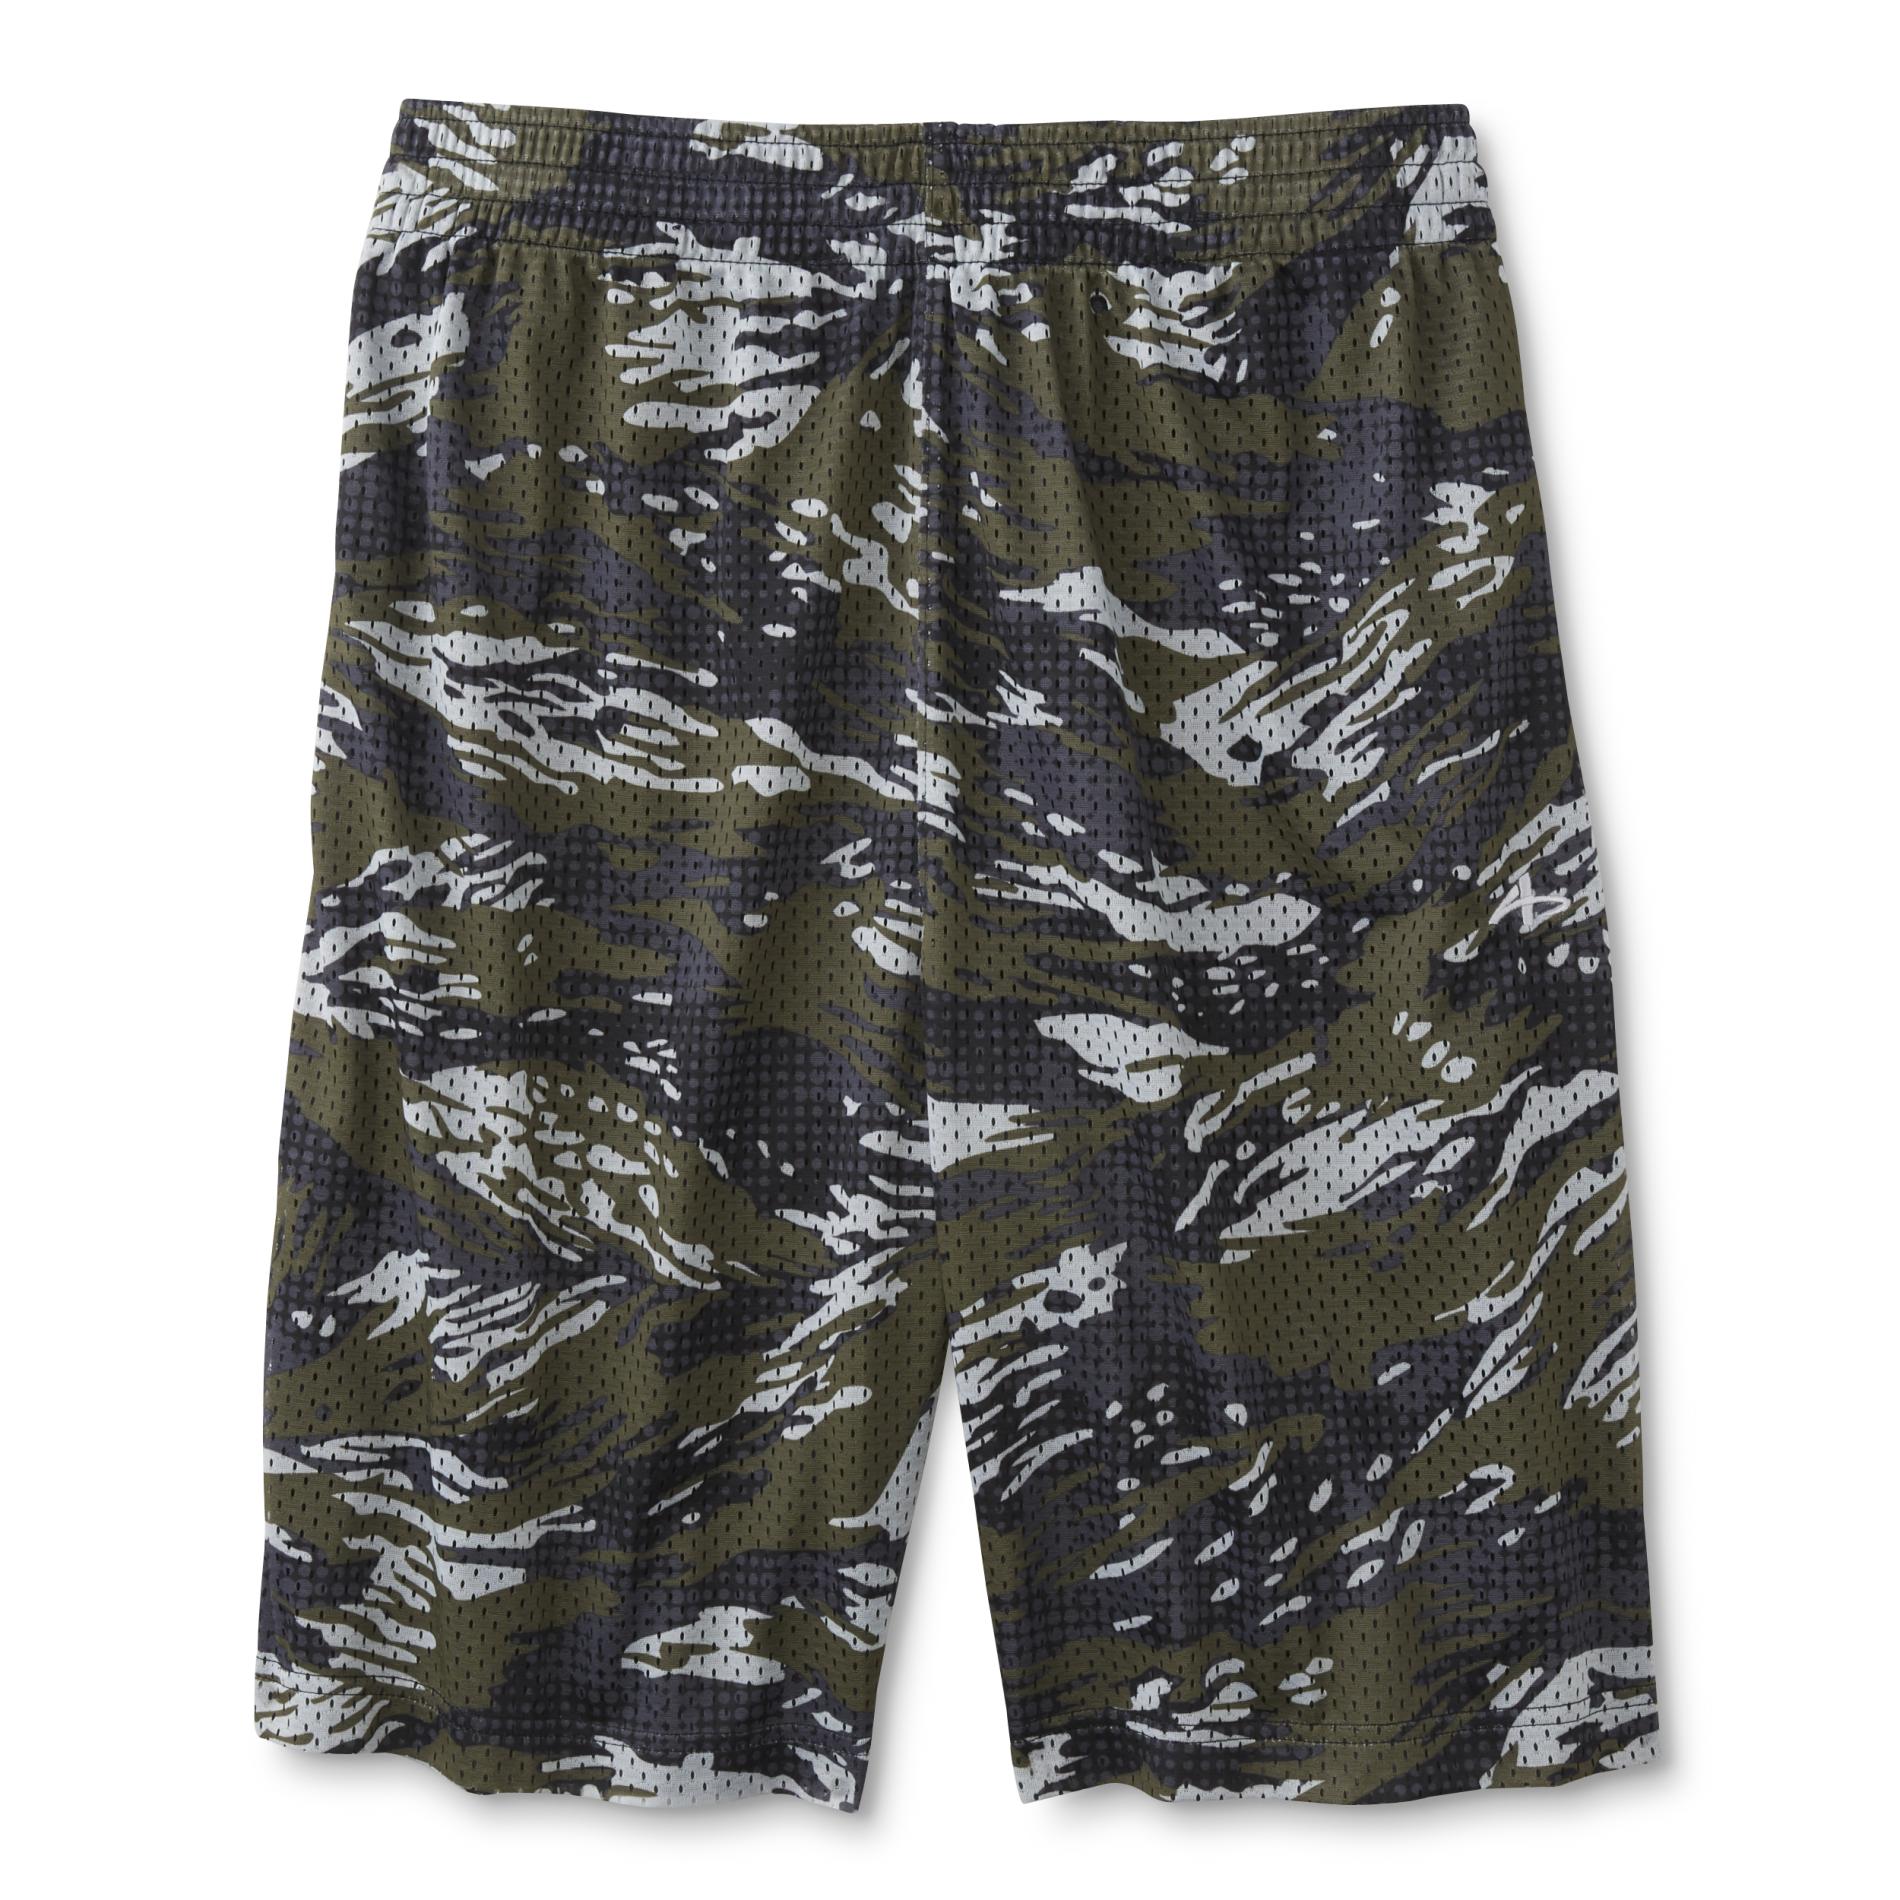 Men's Basketball Shorts - Camouflage